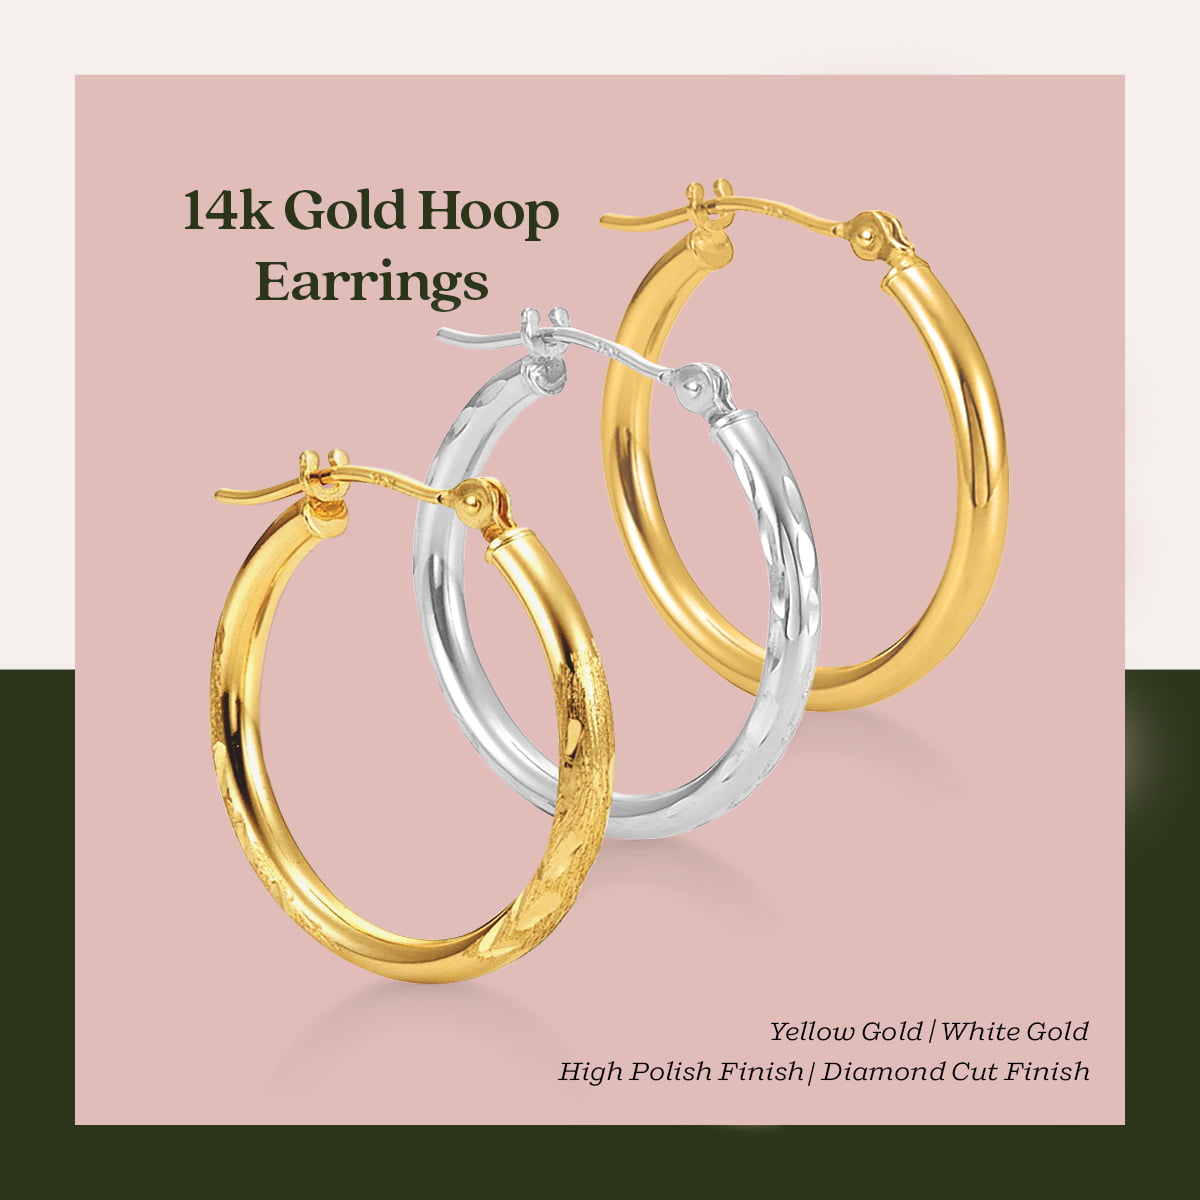 GoldenMine 14k Yellow Gold 5mm Basic Hollow Hoop Earrings 23 x 23 mm 